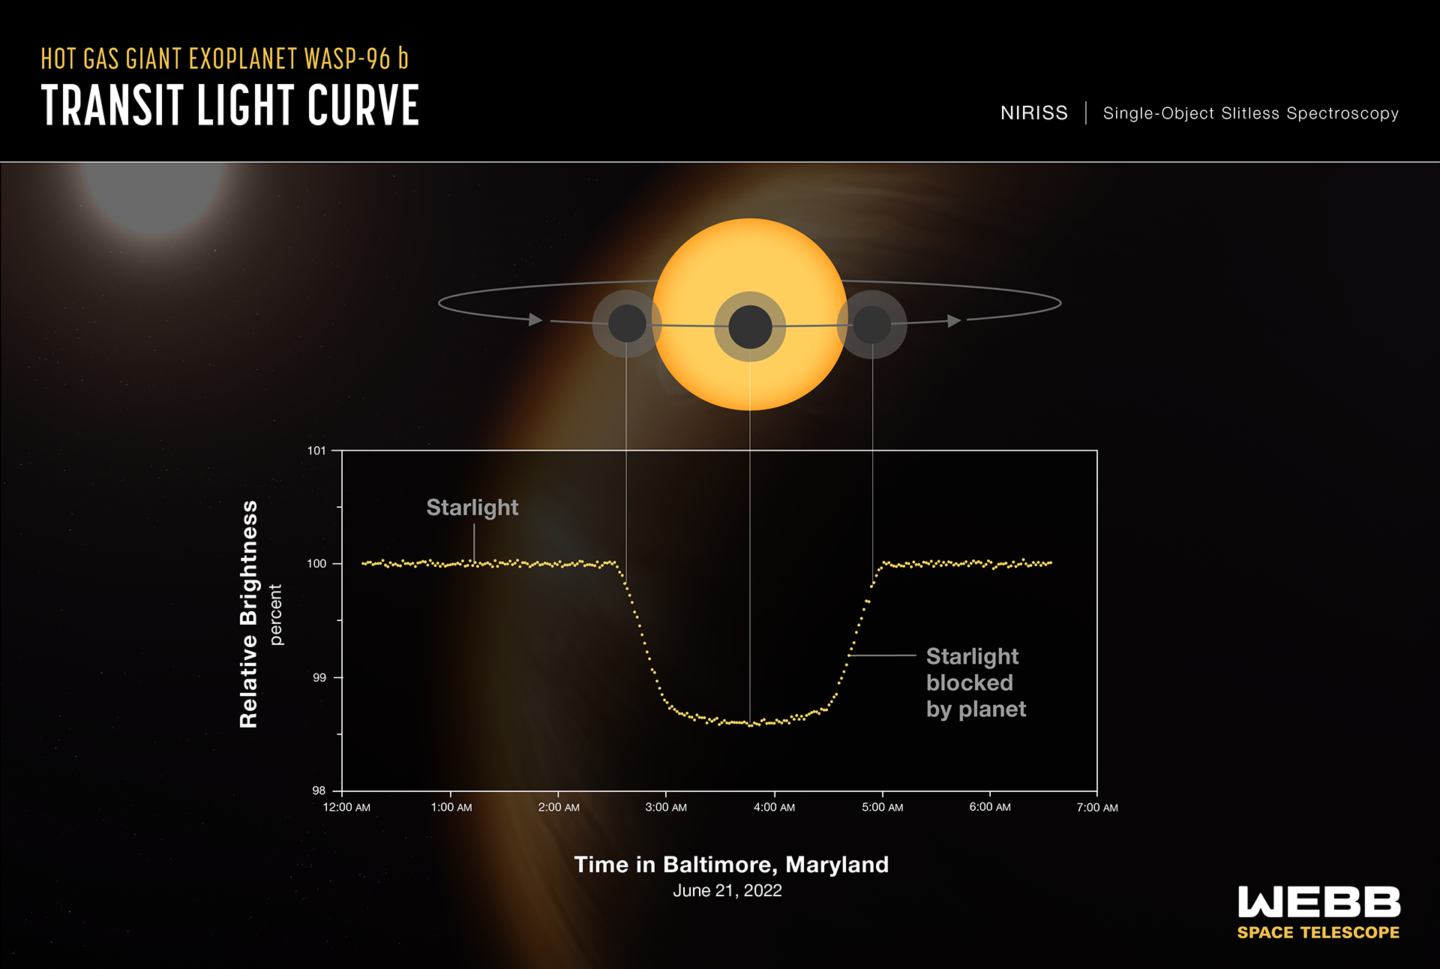 Exoplanet WASP 96 b transit light curve